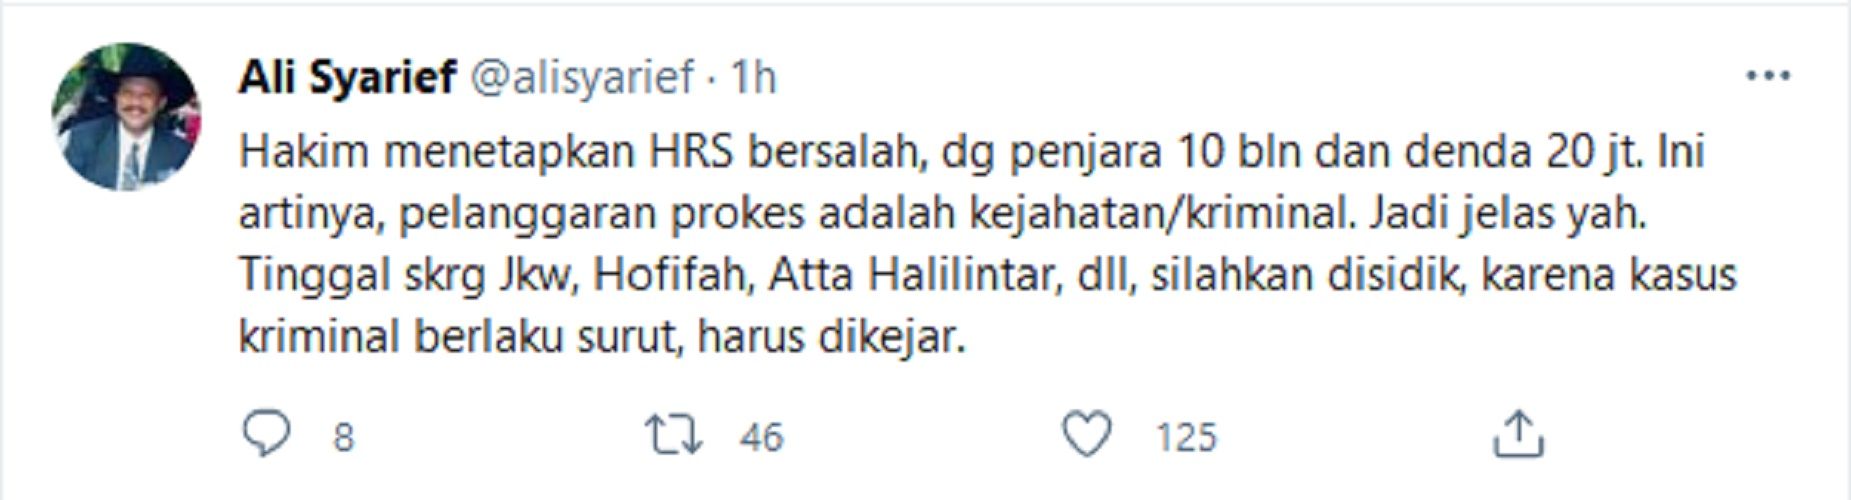 HRS Divonis Bersalah dengan Penjara dan Denda, Ali Syarief: Jokowi, Khofifah, Atta Halilintar Silahkan Disidik